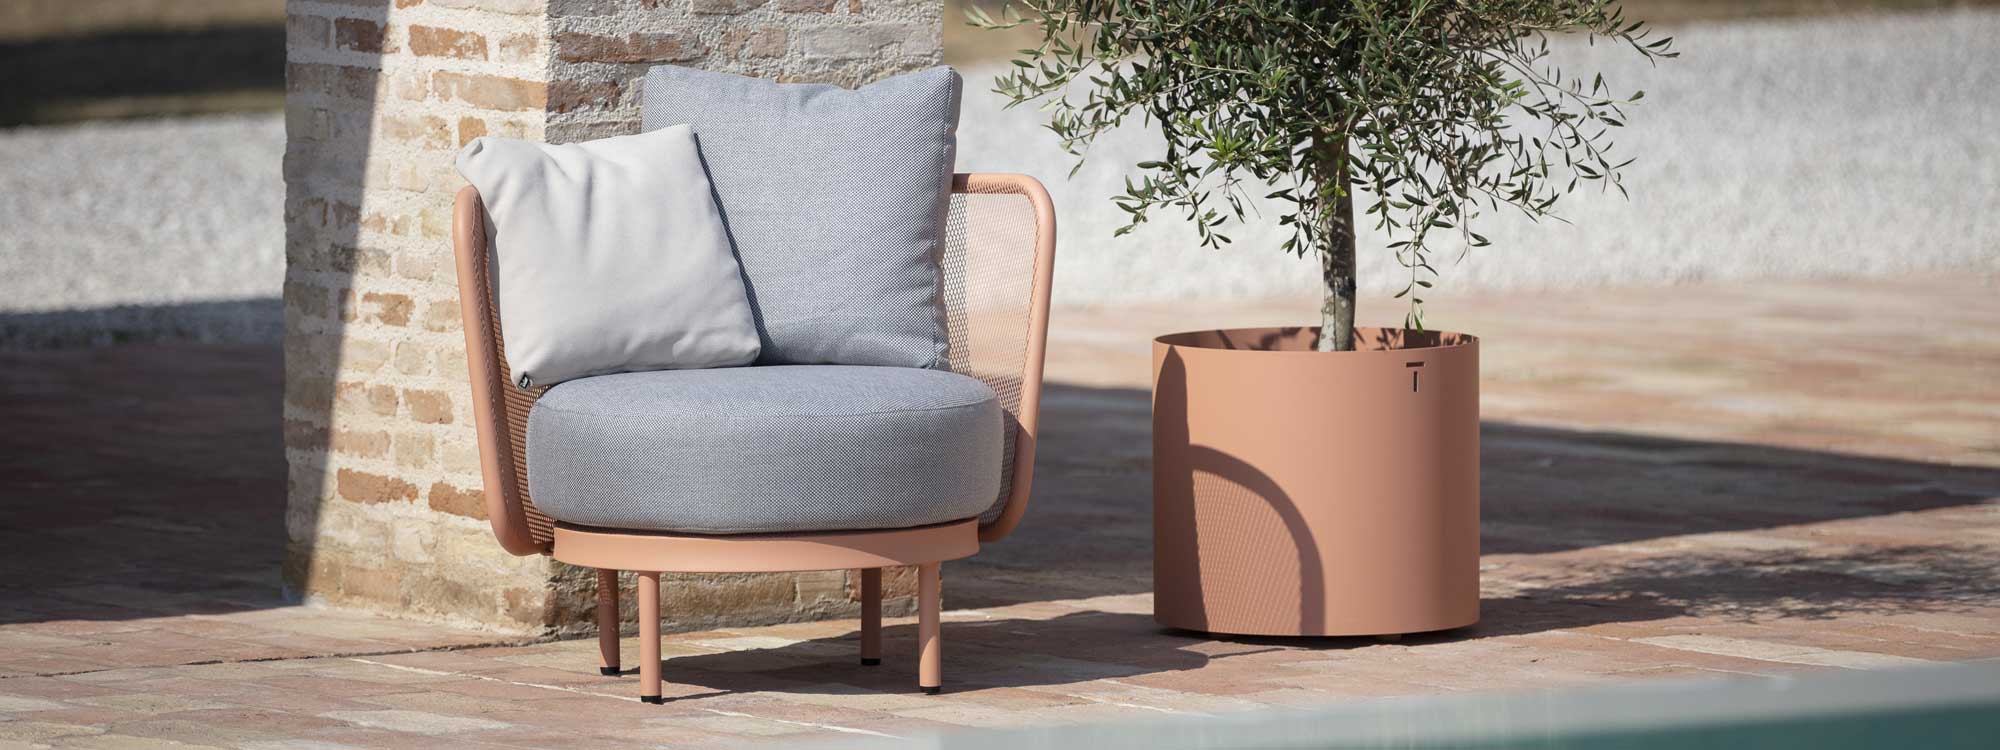 Baza modern garden lounge chair in Salmon beige on sunny terrace